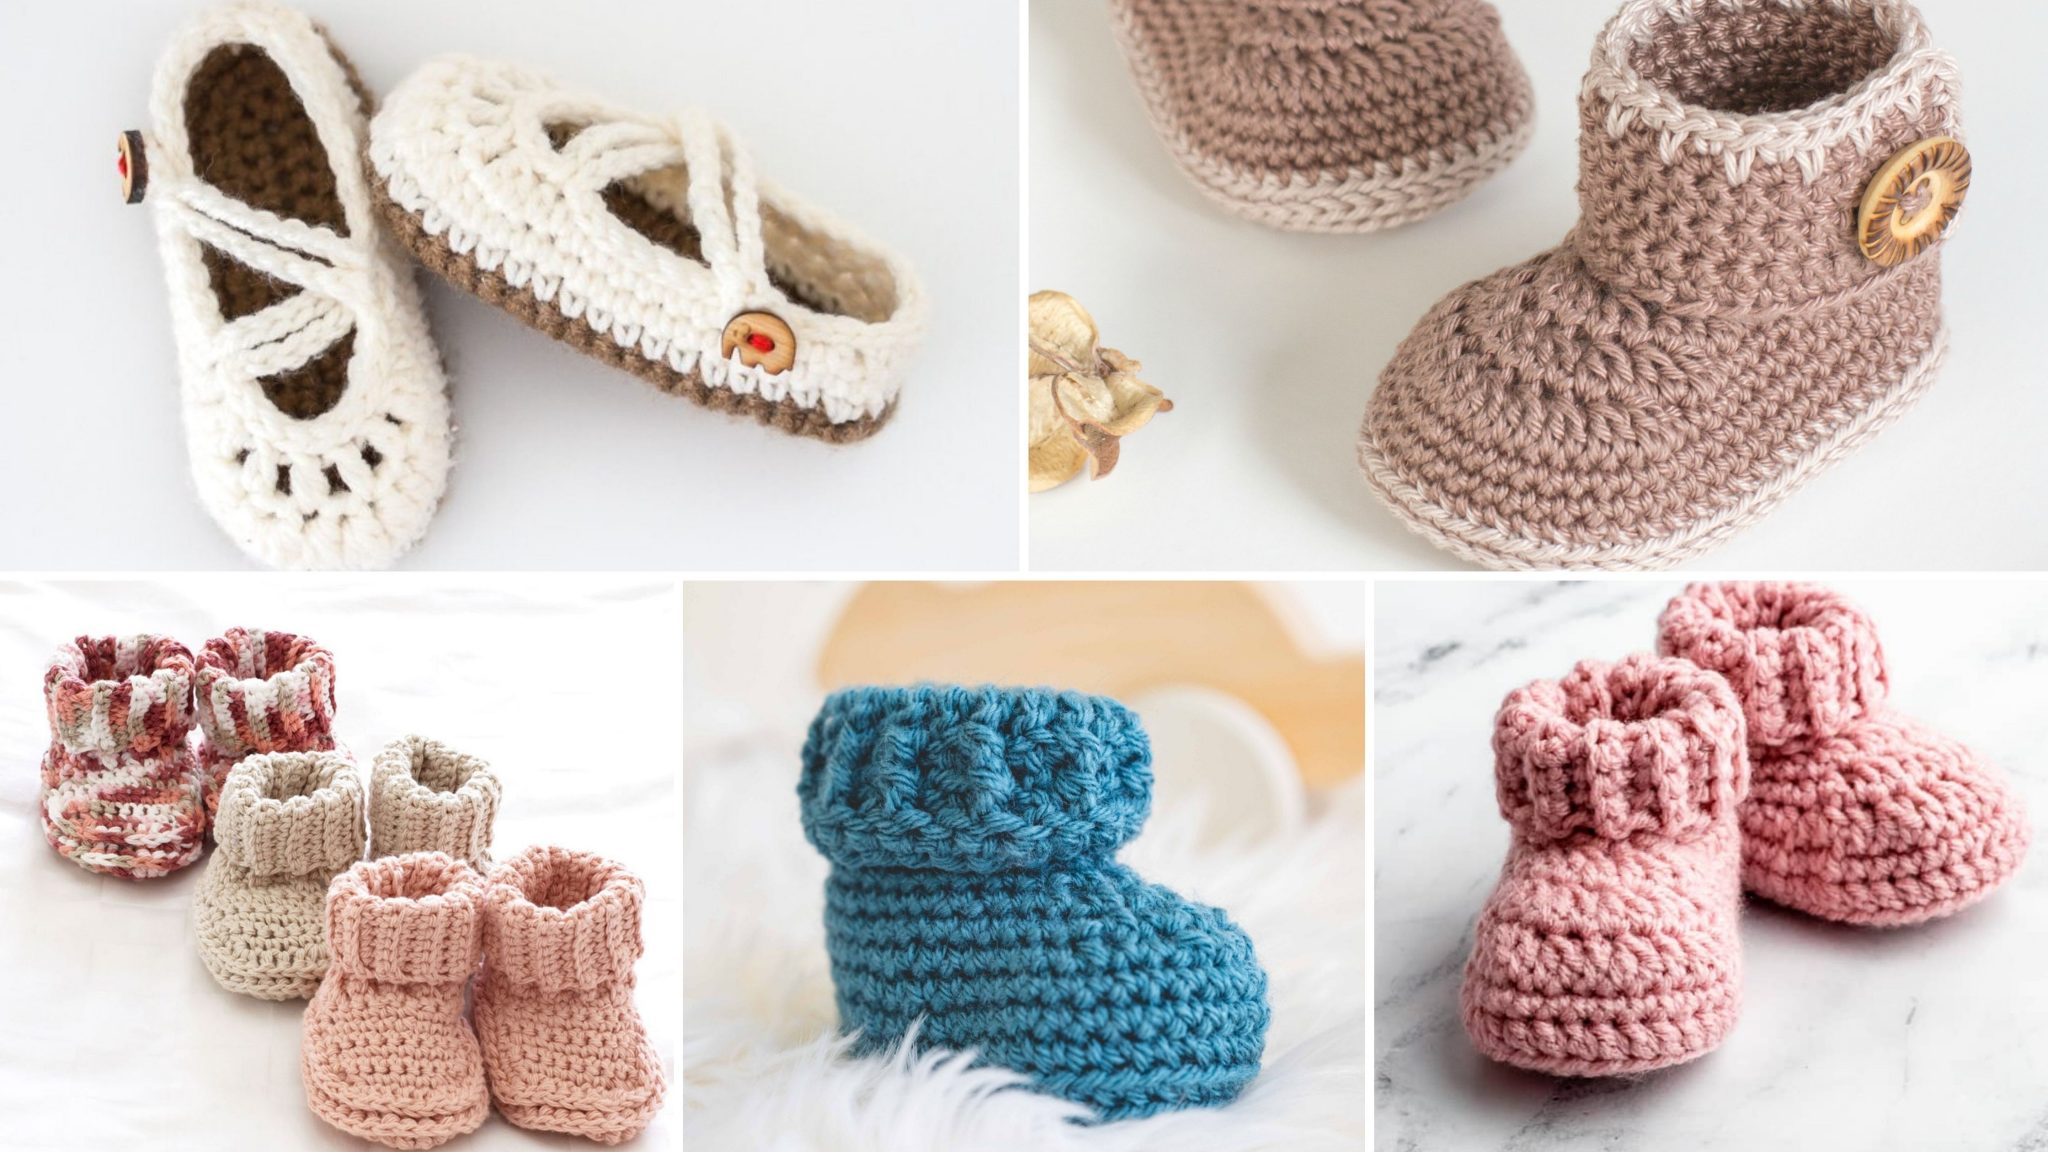 classic-crochet-patterns-for-baby-booties-easycrochet